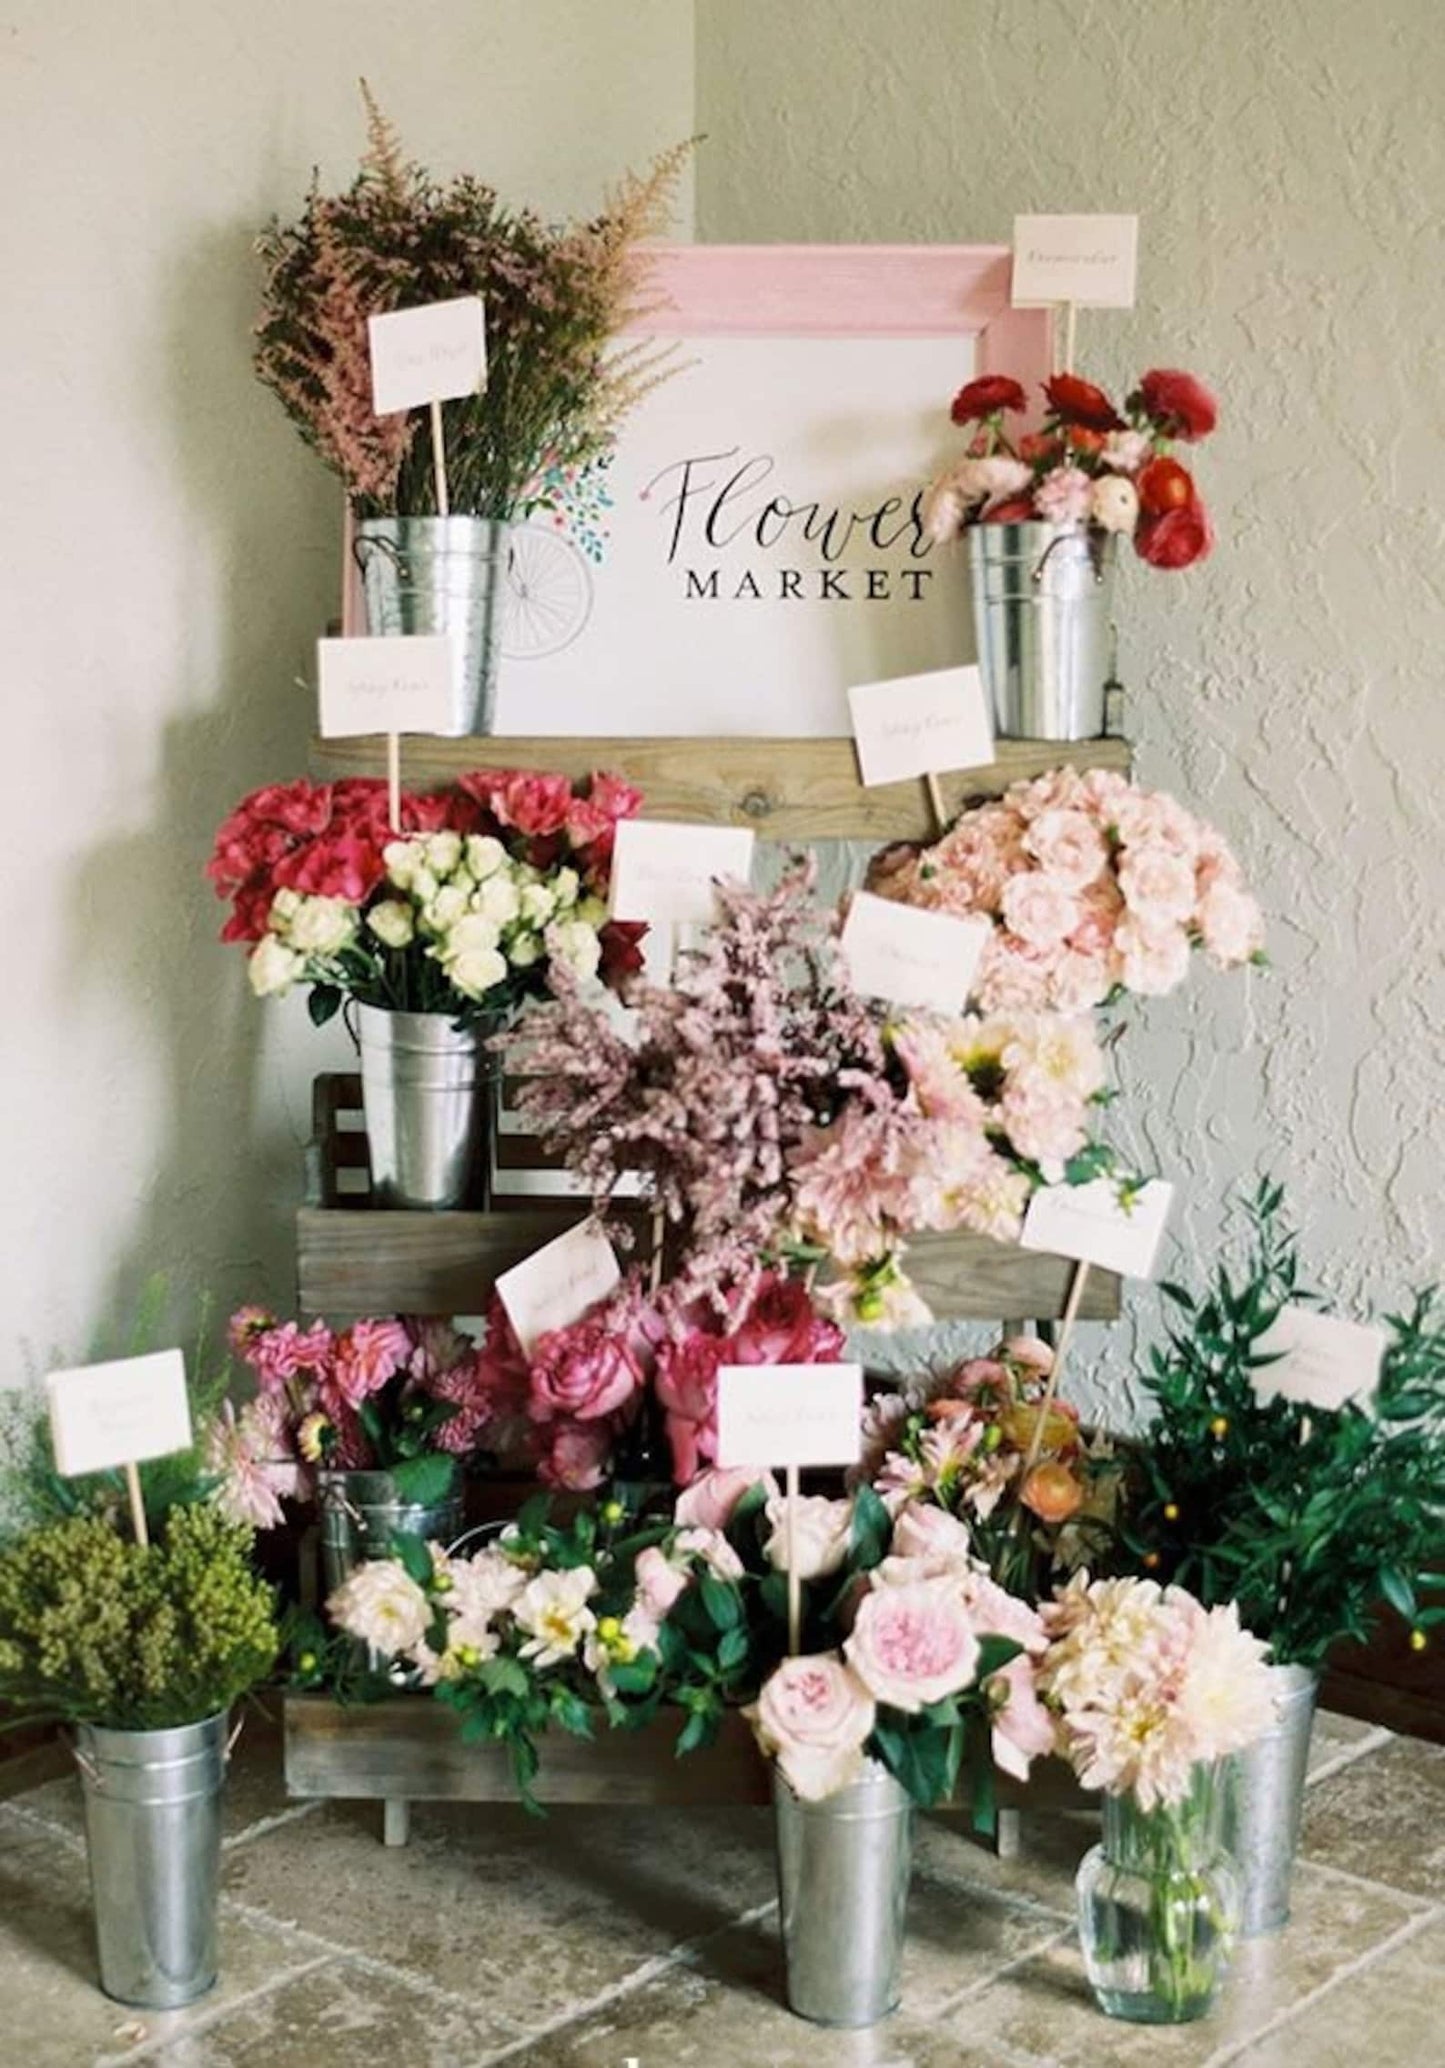 DIY Flower Bar Kit Bouquet Bar for Make Your Own Bouquet Station